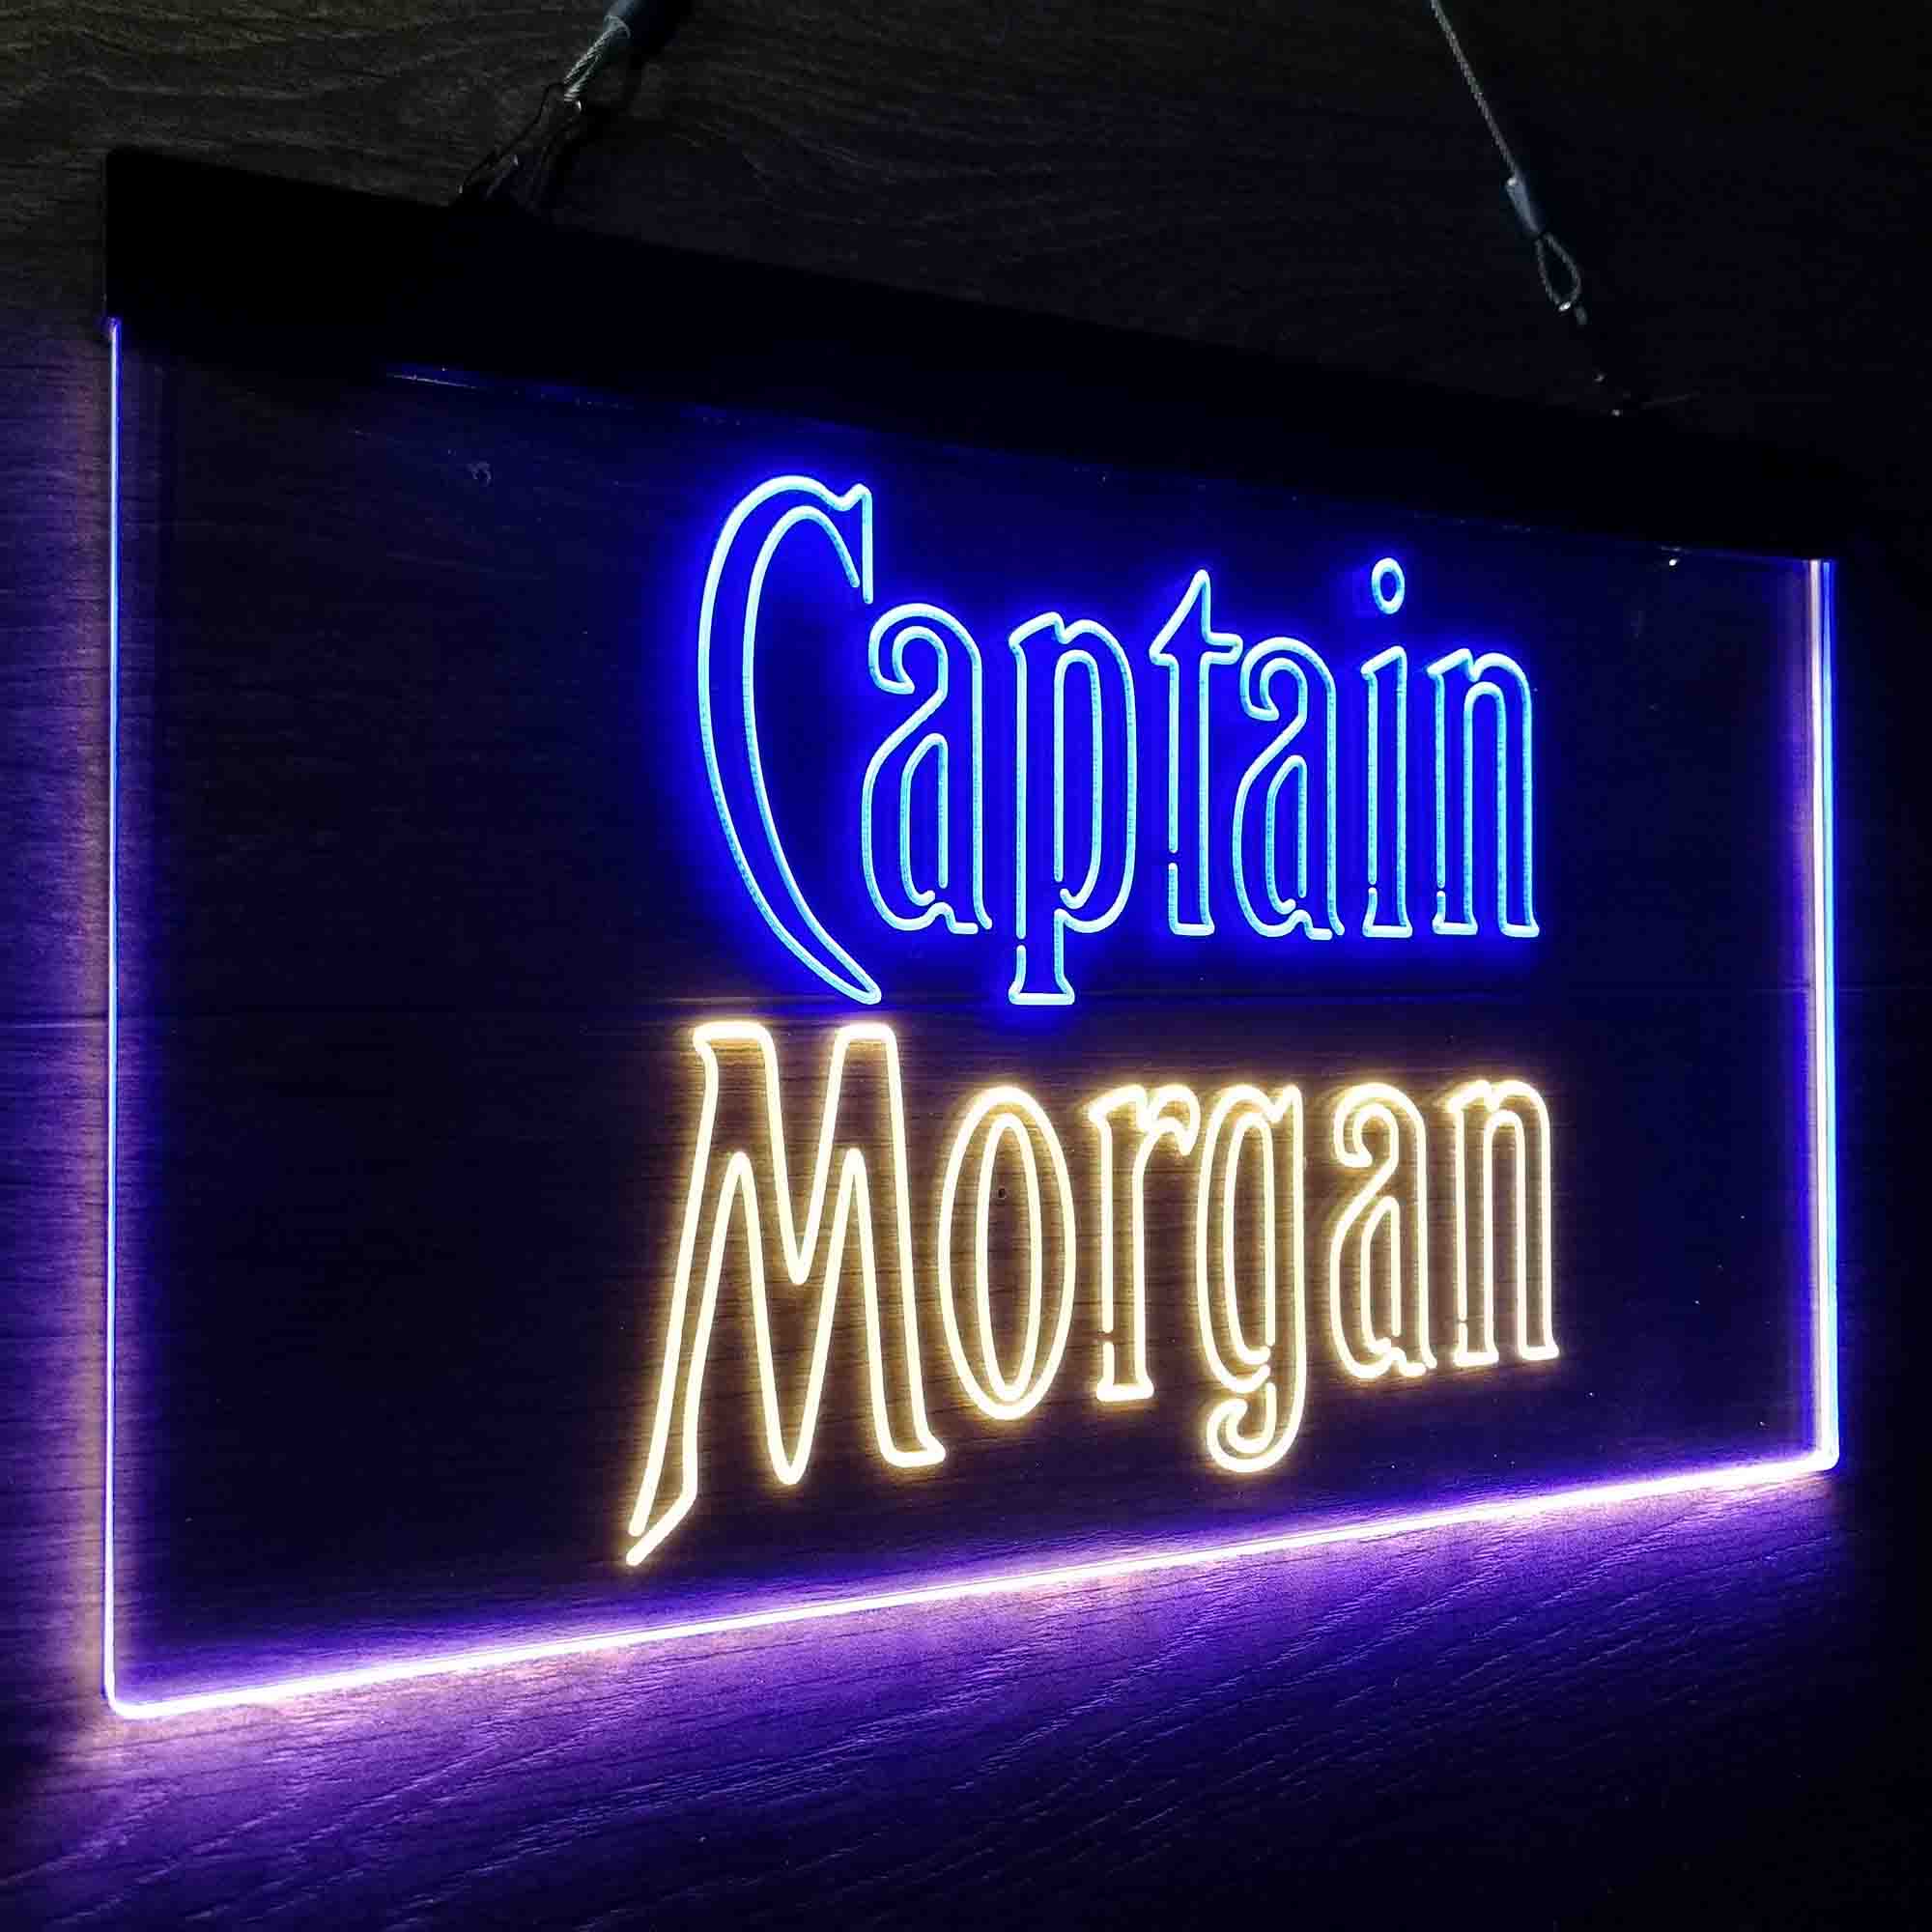 Captain Morgan Wordmark Neon-Like LED Sign - ProLedSign